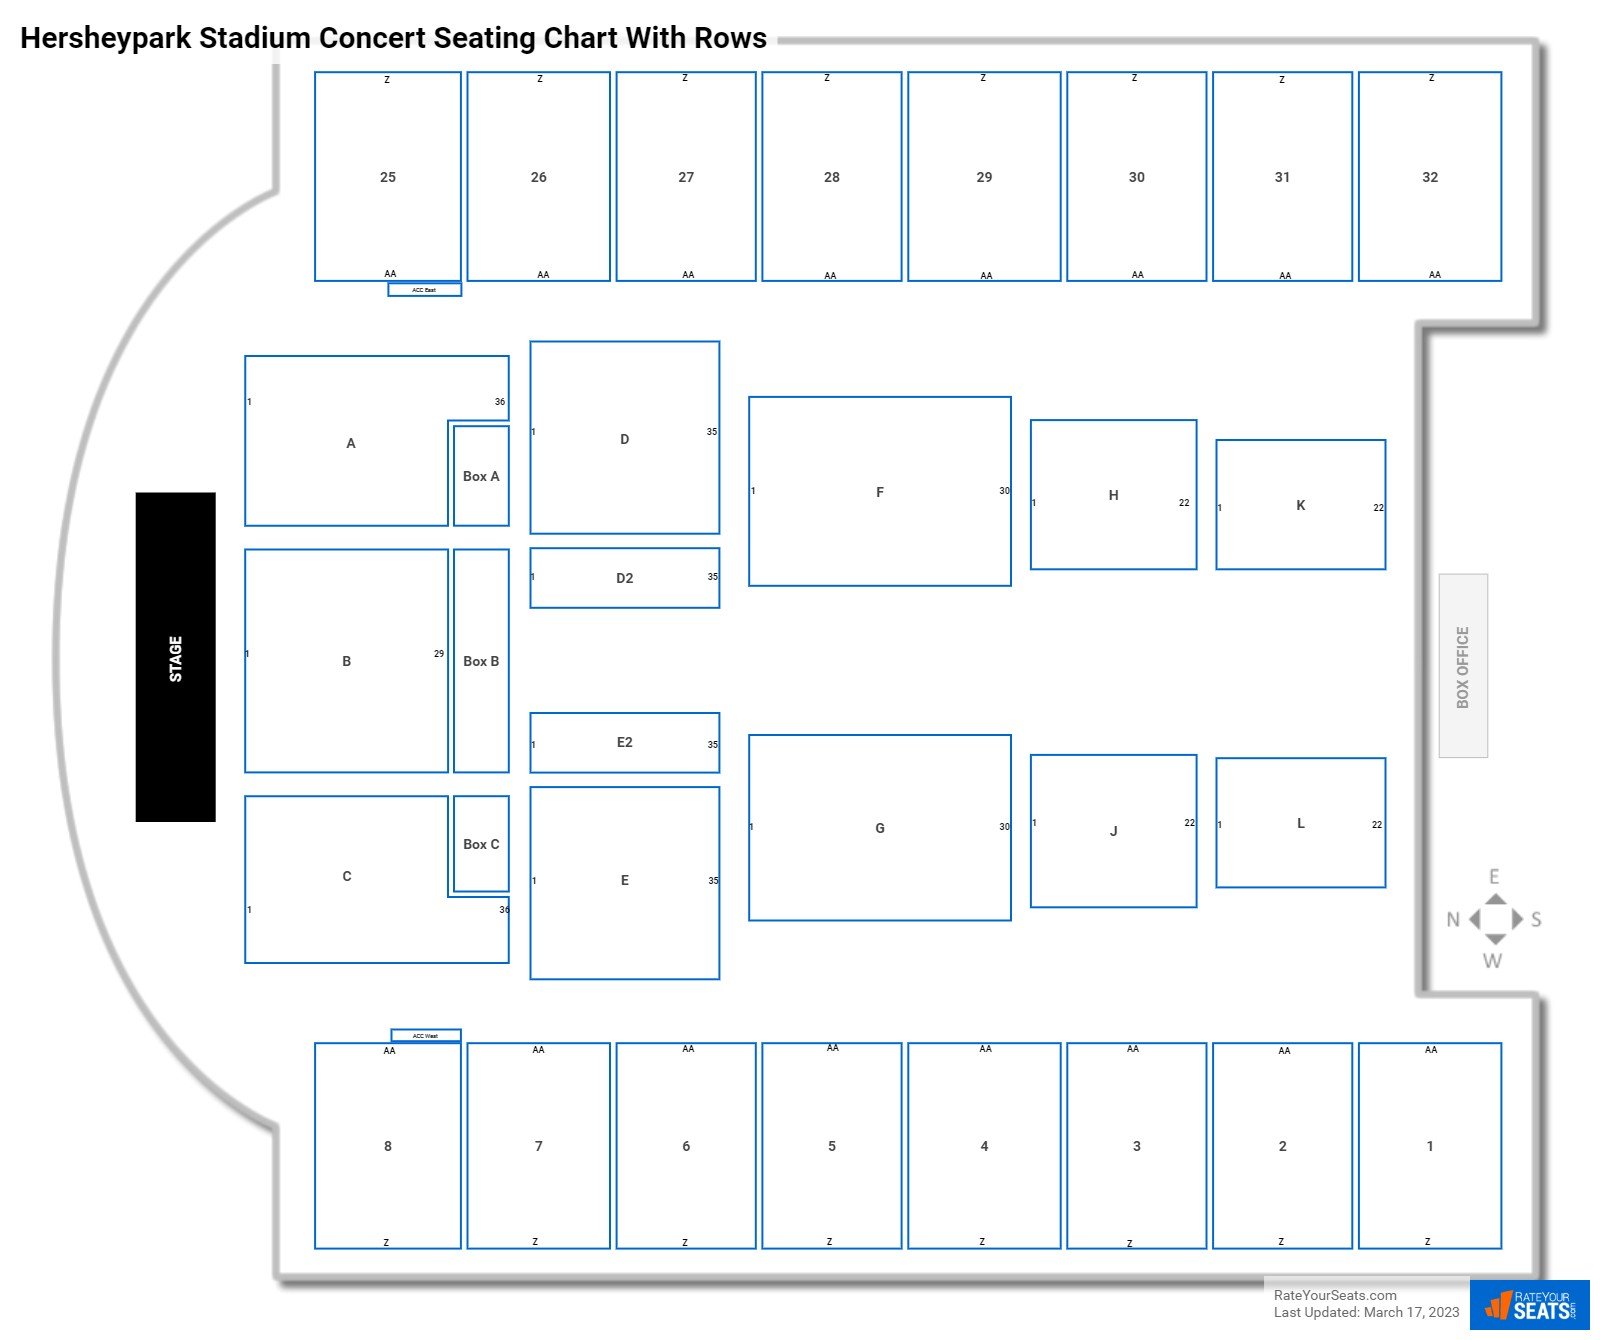 Hersheypark Stadium seating chart with row numbers